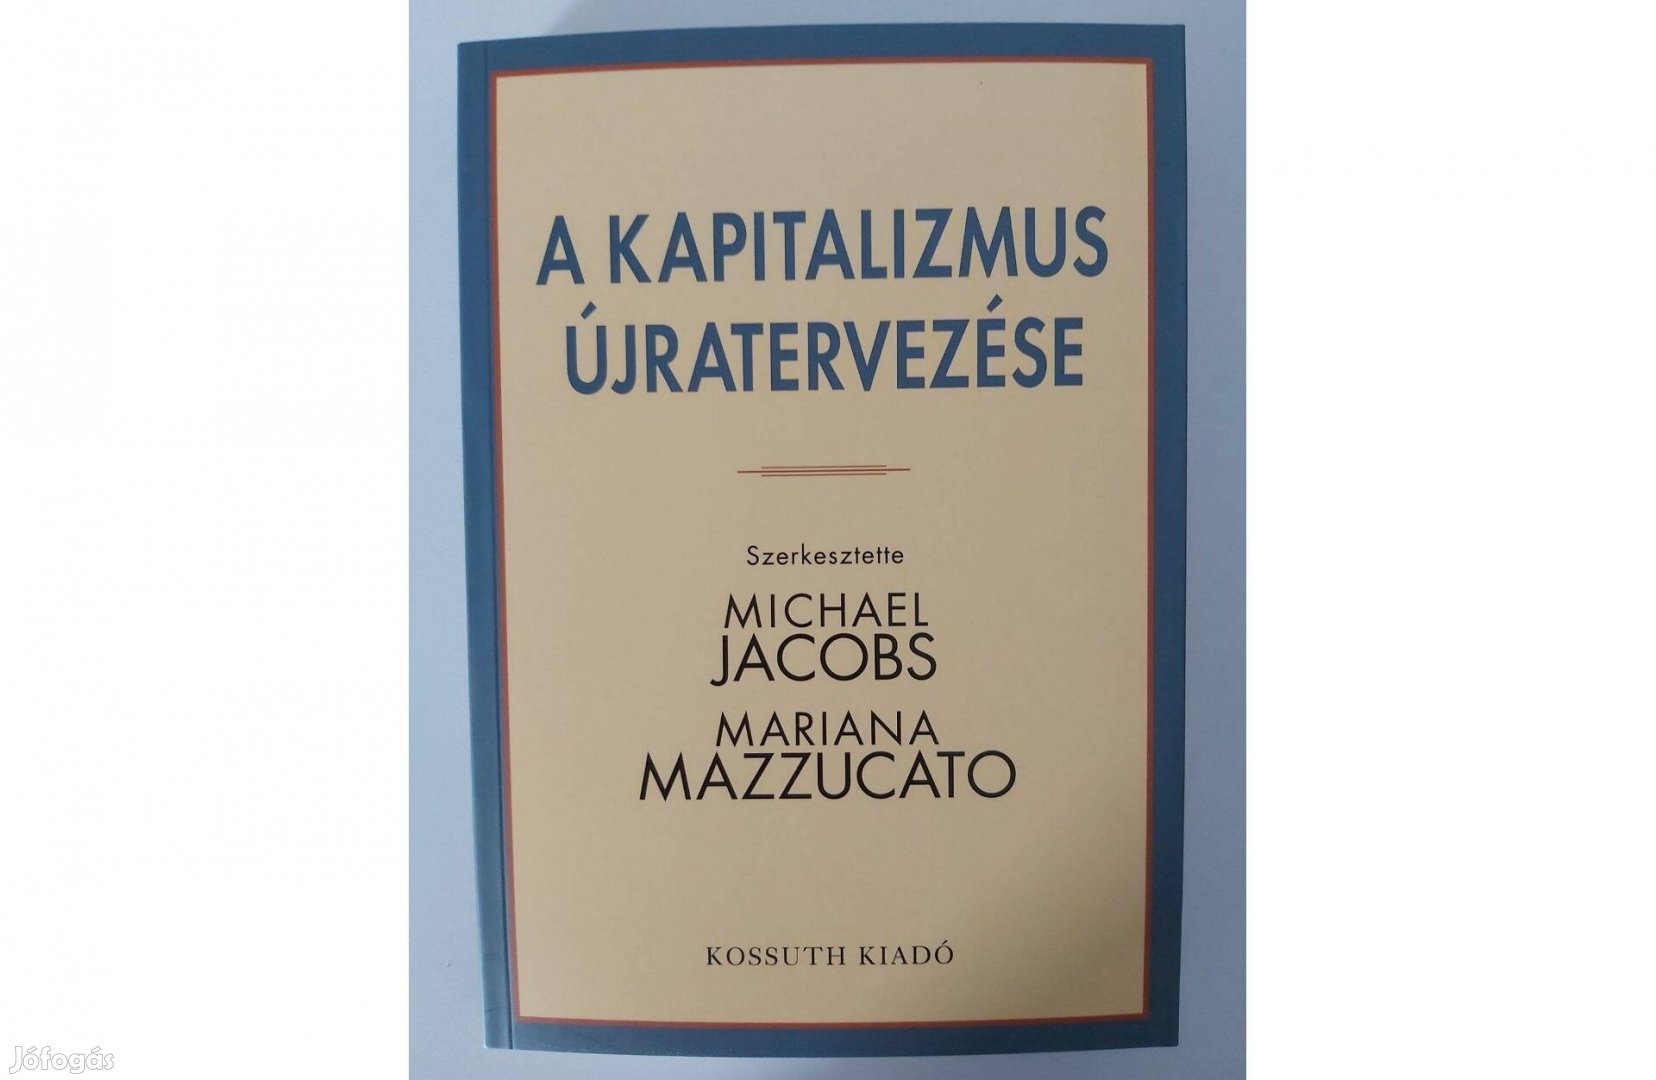 Michael Jacobs Mariana Mazzucato: A kapitalizmus újratervezése